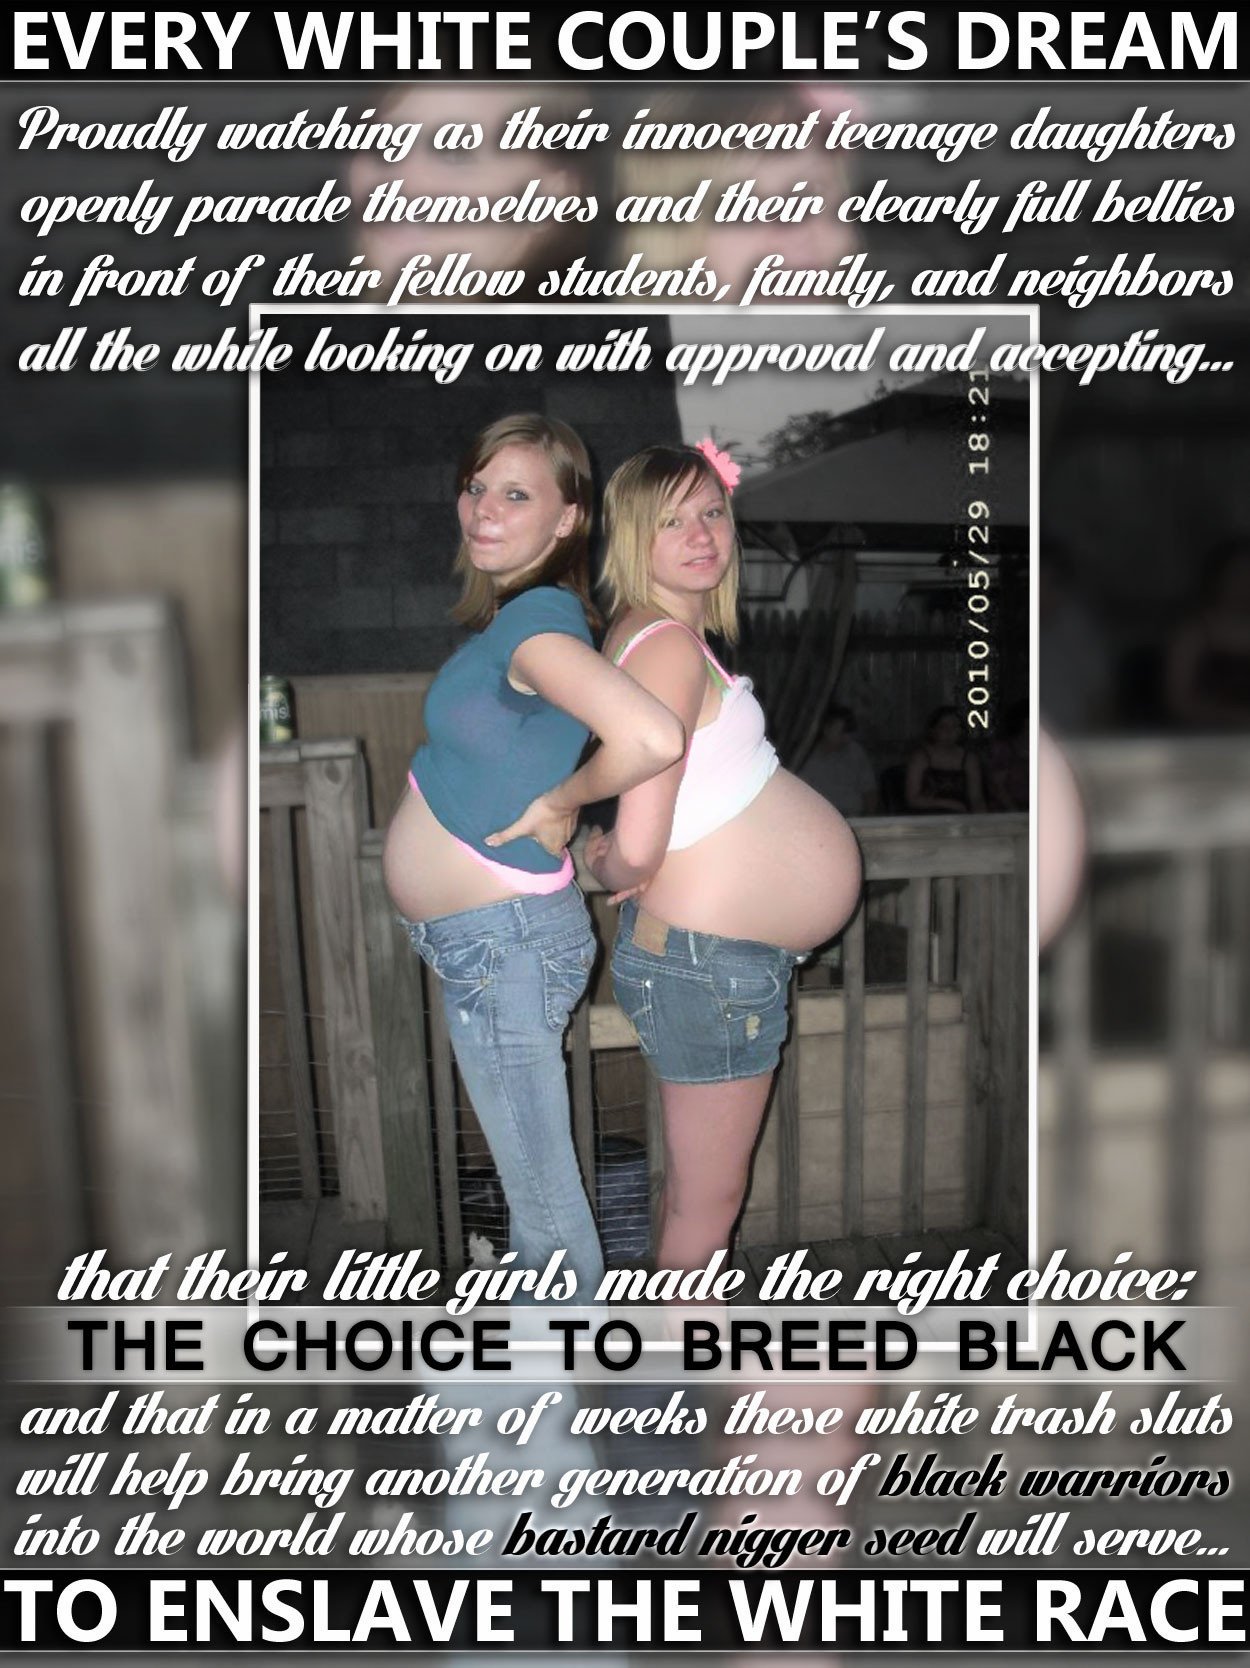 pregnant-interracial-captions-23697 | Darkwanderer - Cuckold forums